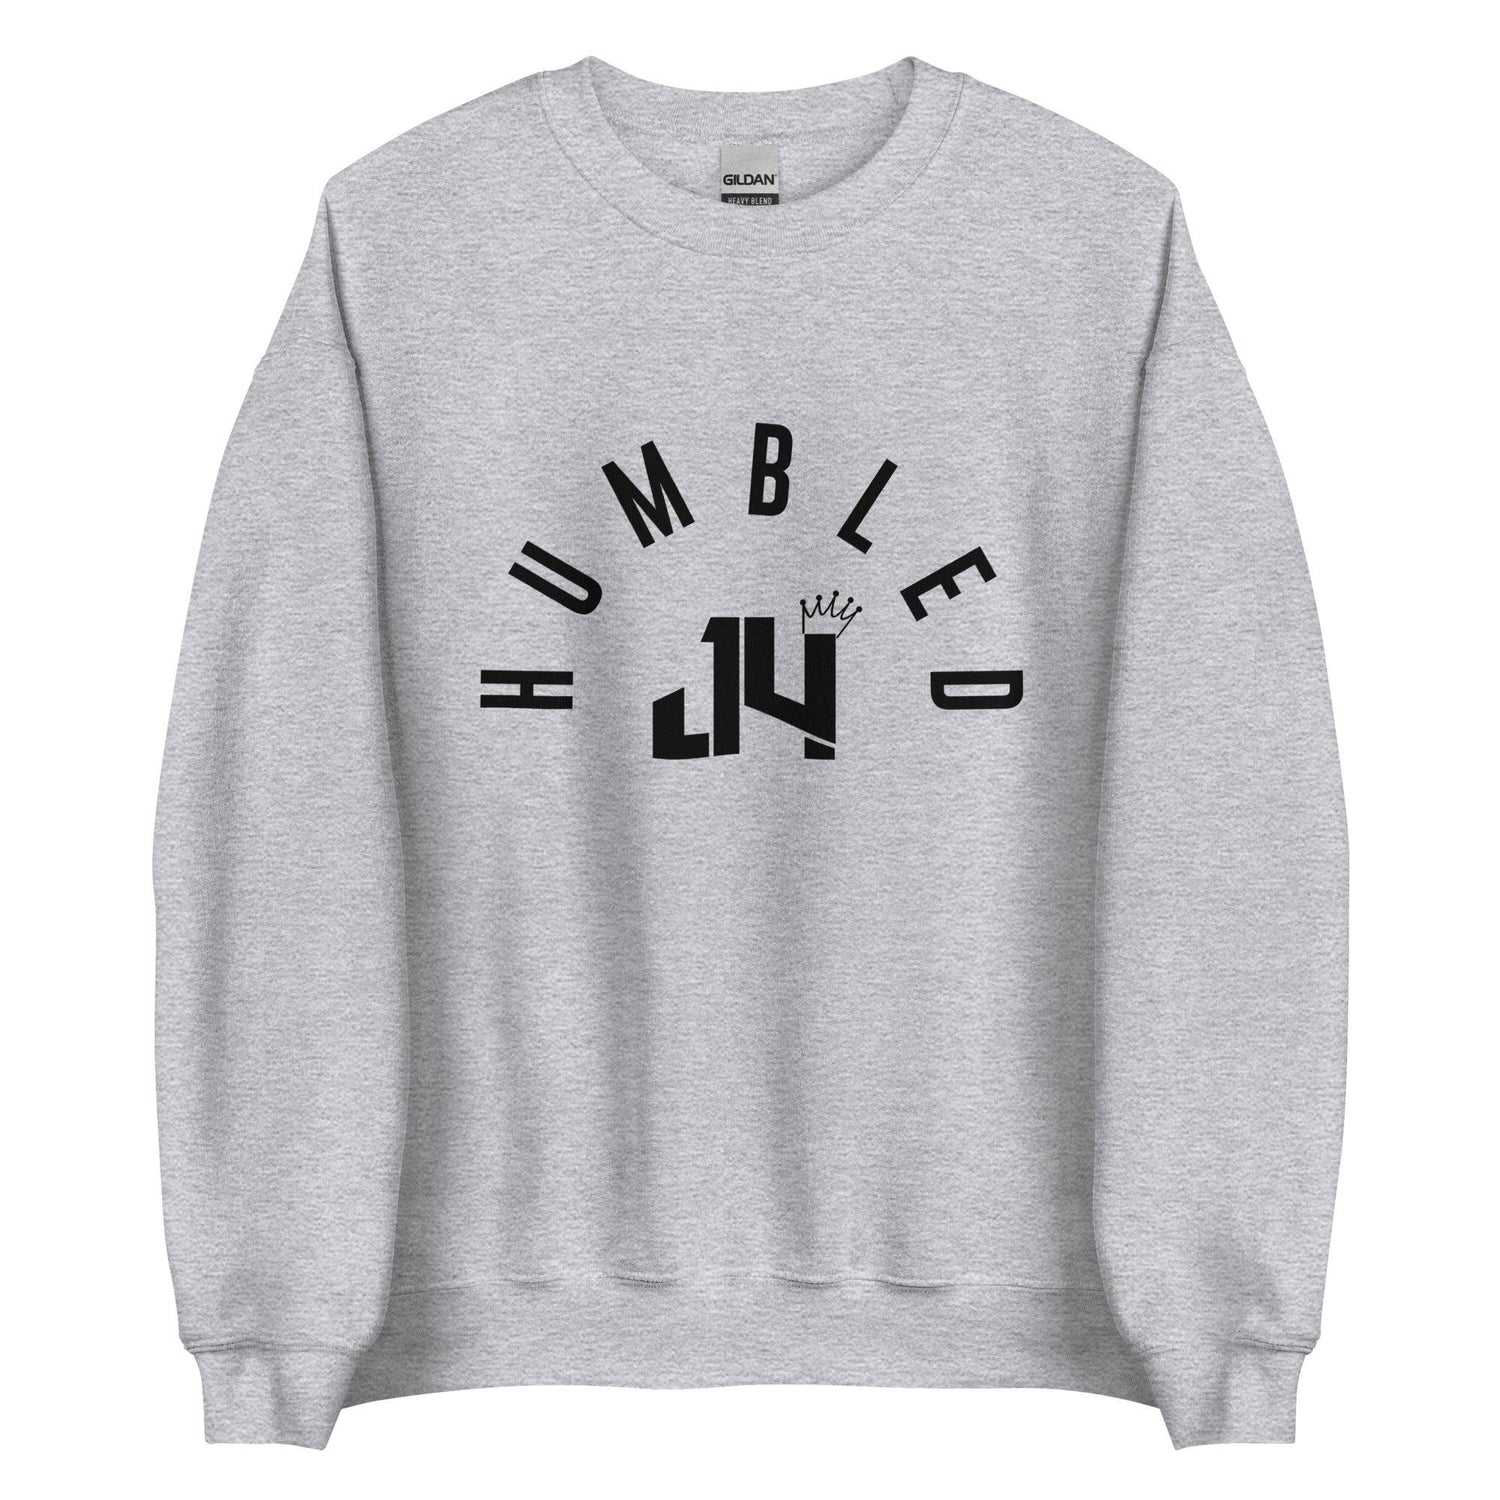 Jeff Foreman “Humbled” Sweatshirt - Fan Arch